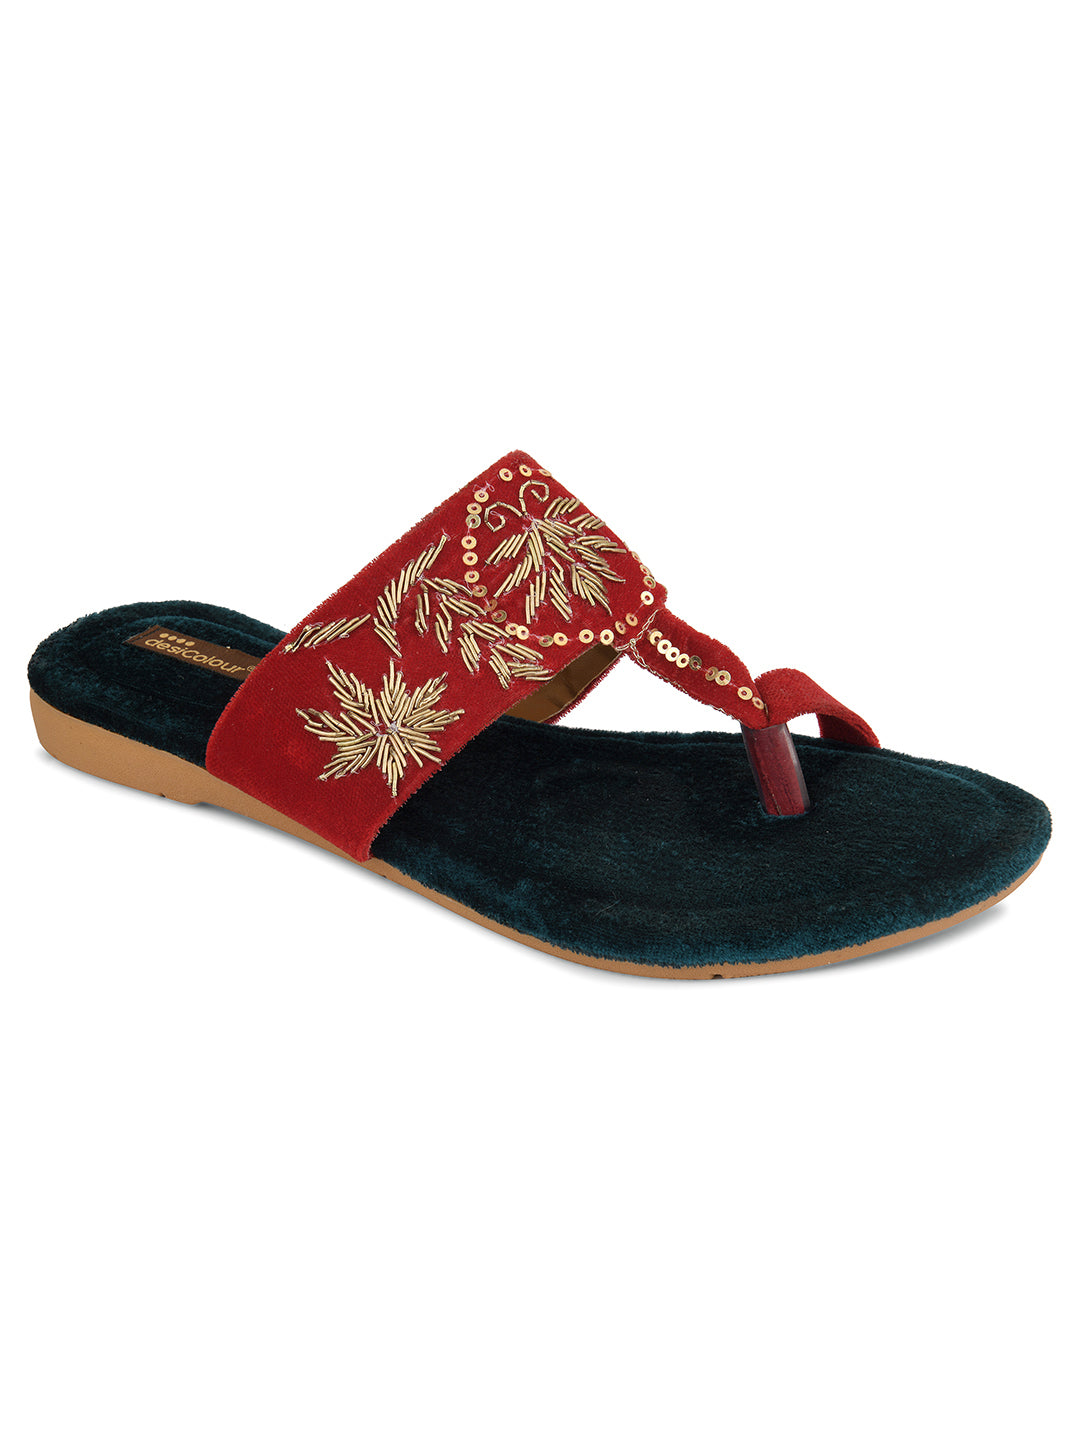 Women's Red Slipper  Indian Ethnic Comfort Footwear - Desi Colour